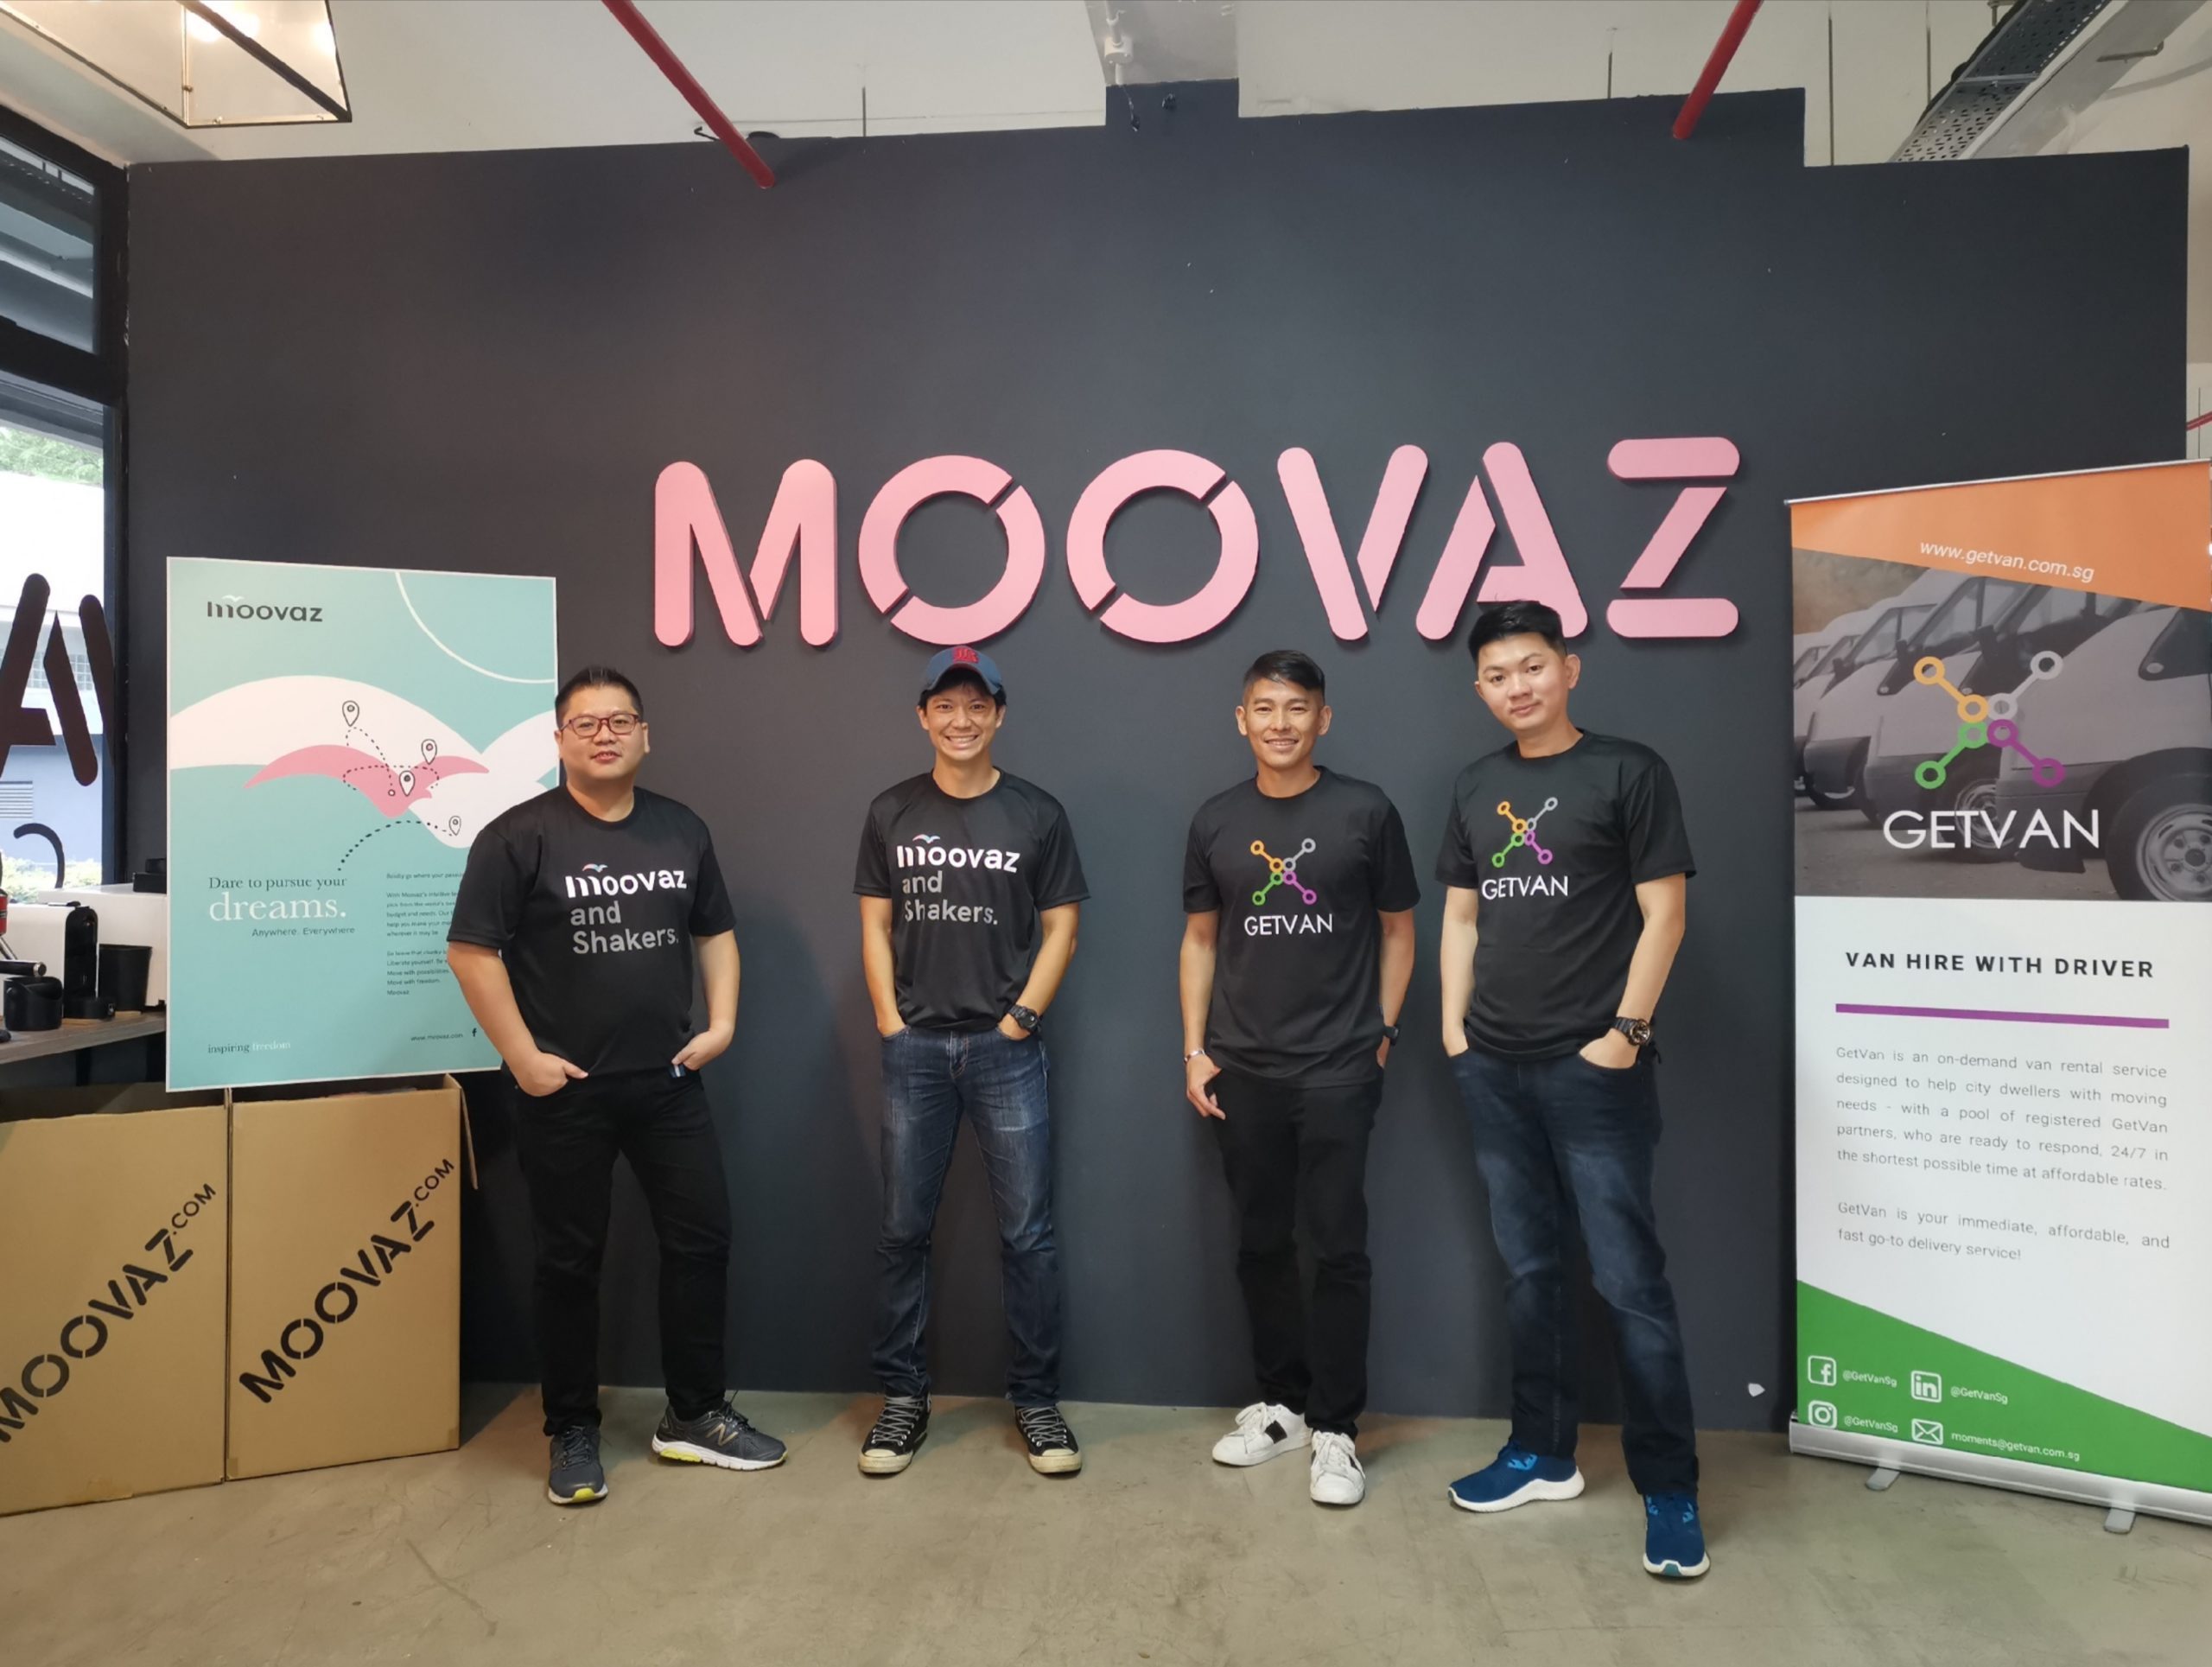 Singapore’s logistics provider Moovaz acquires van-hailing startup GetVan